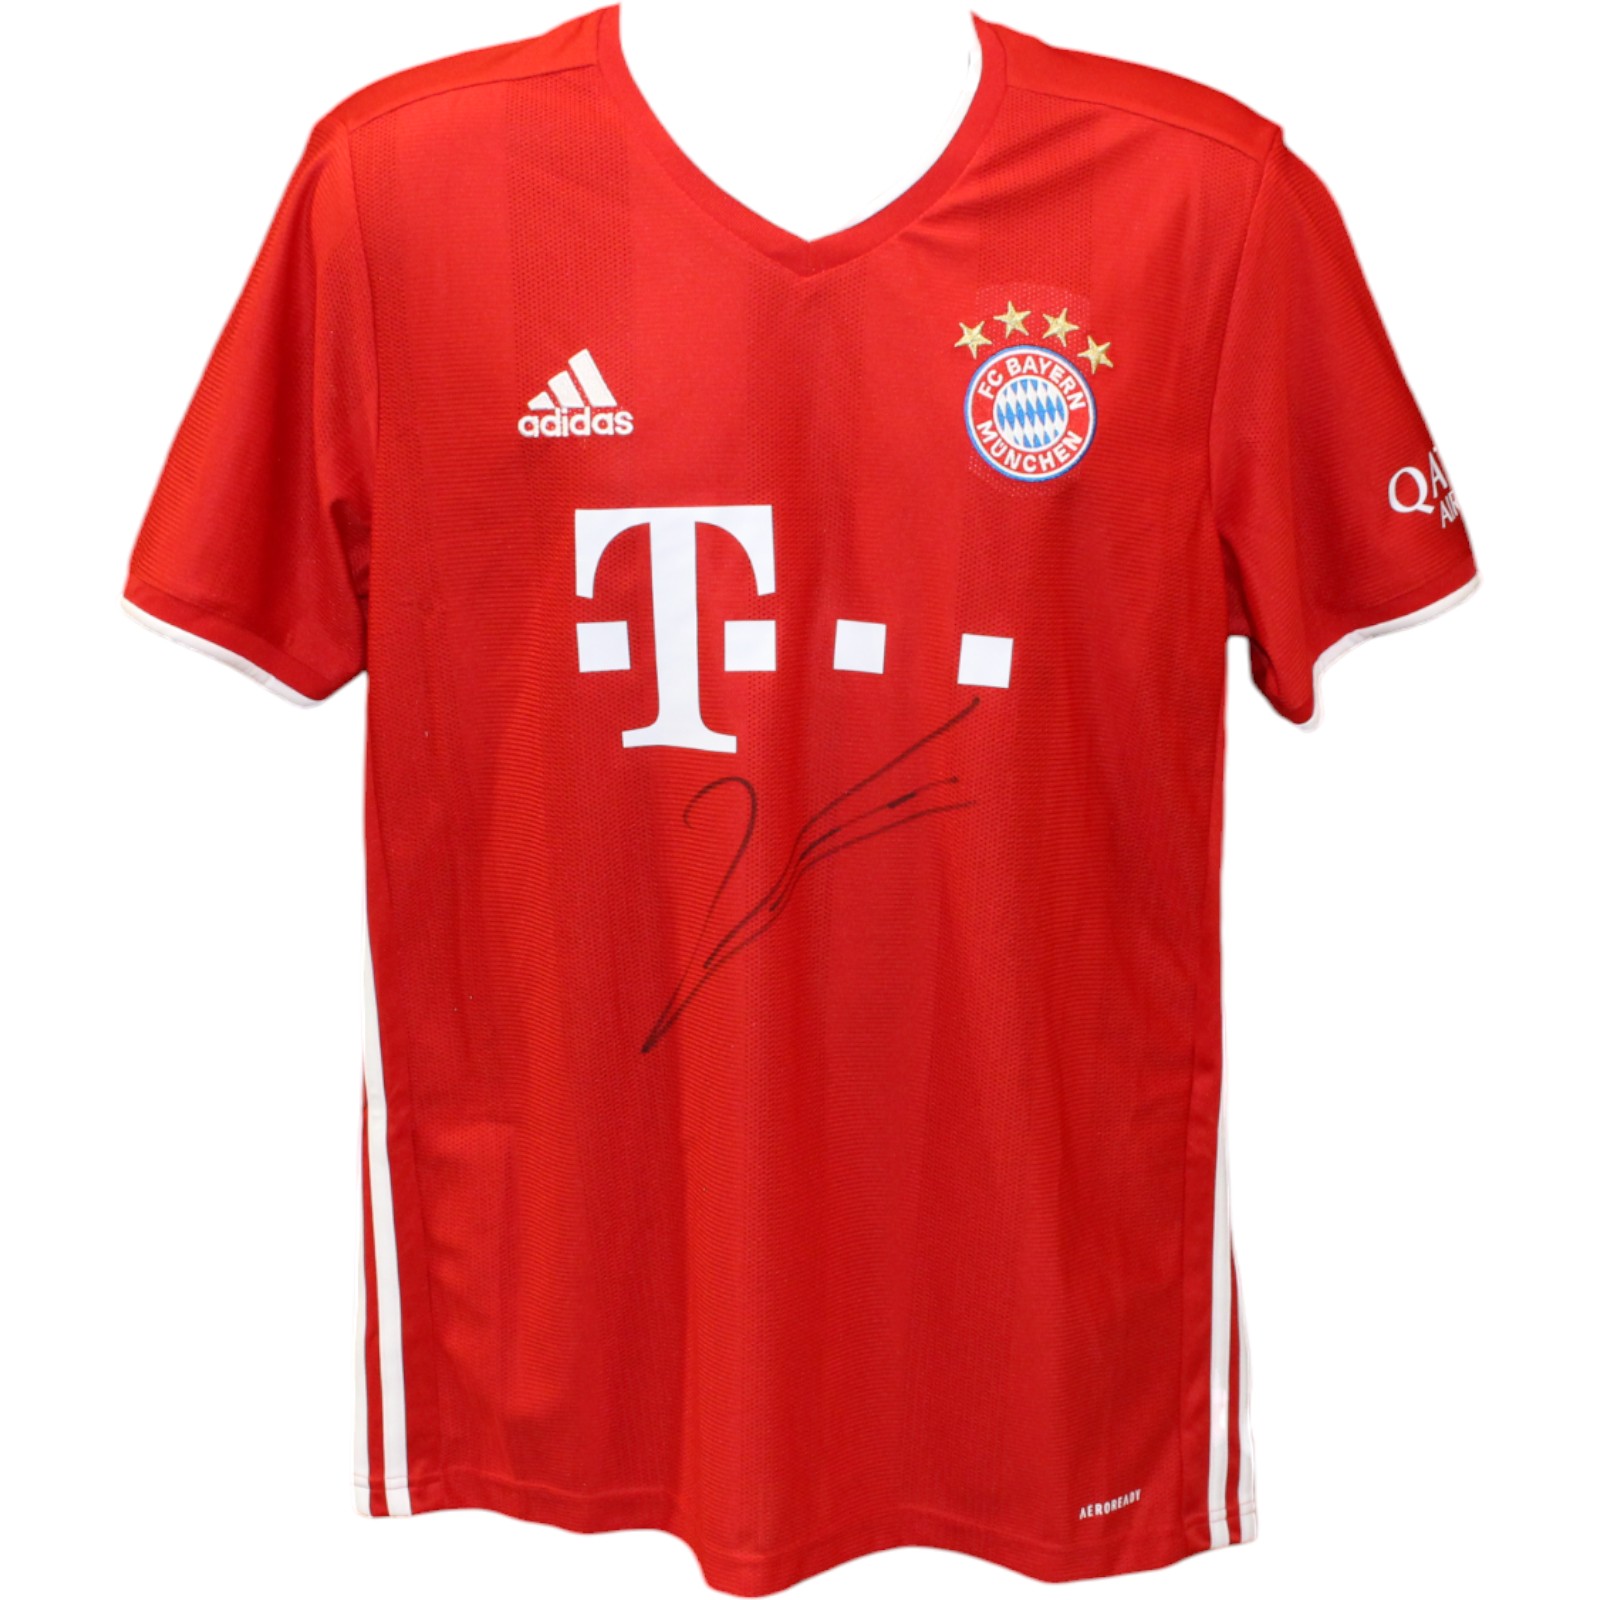 Robert Lewandowski Signed Bayern Munich Adidas Red Jersey Beckett